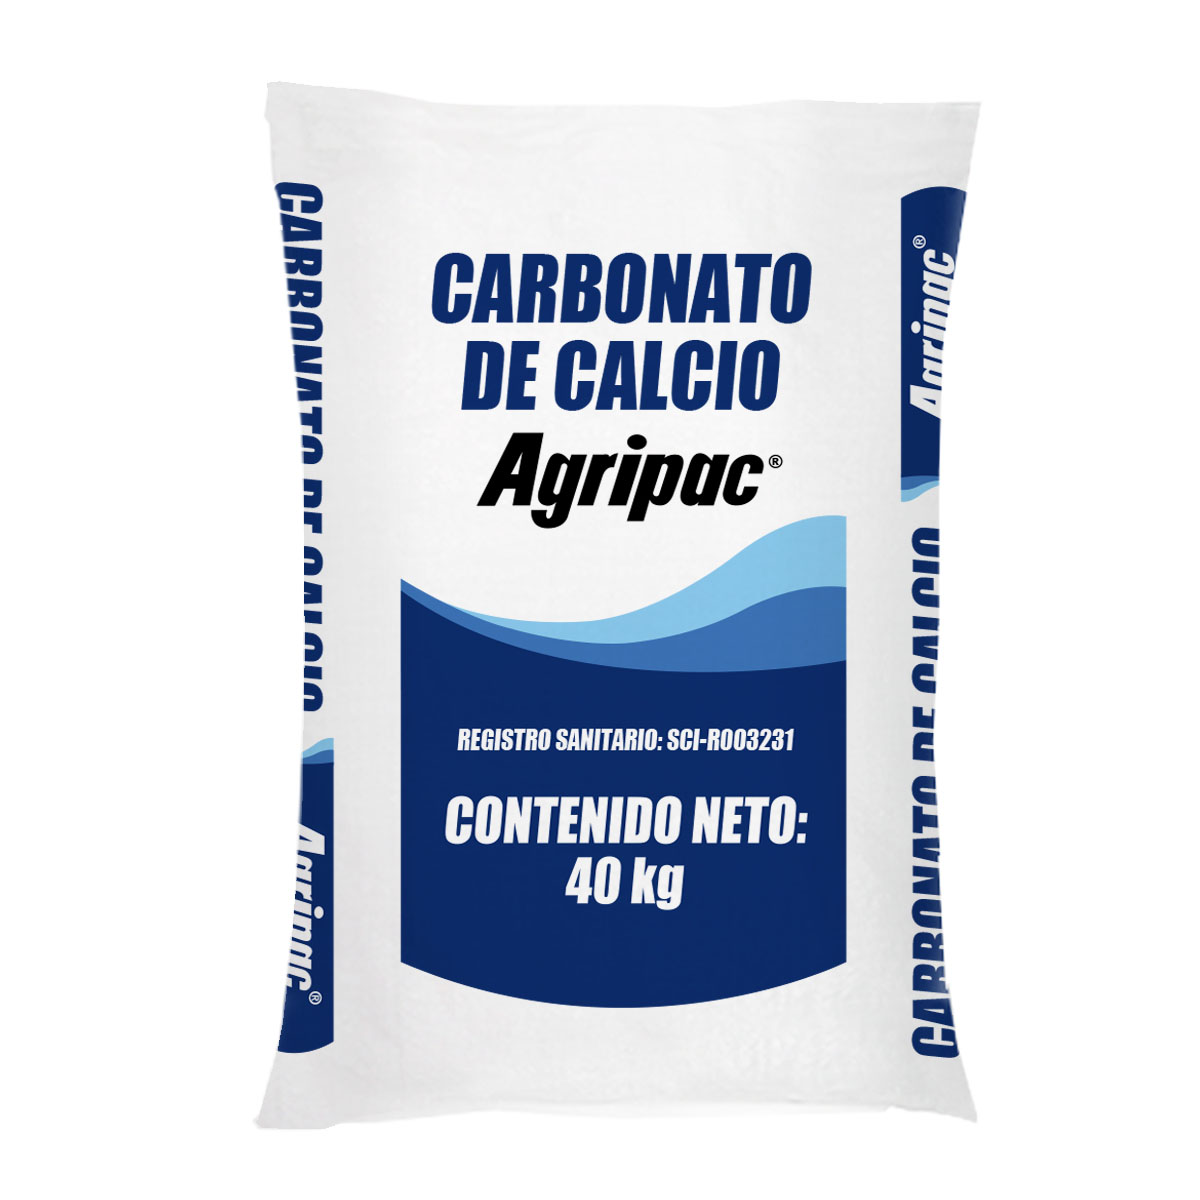 CARBONATO DE CALCIO /CAL AGRICOLA